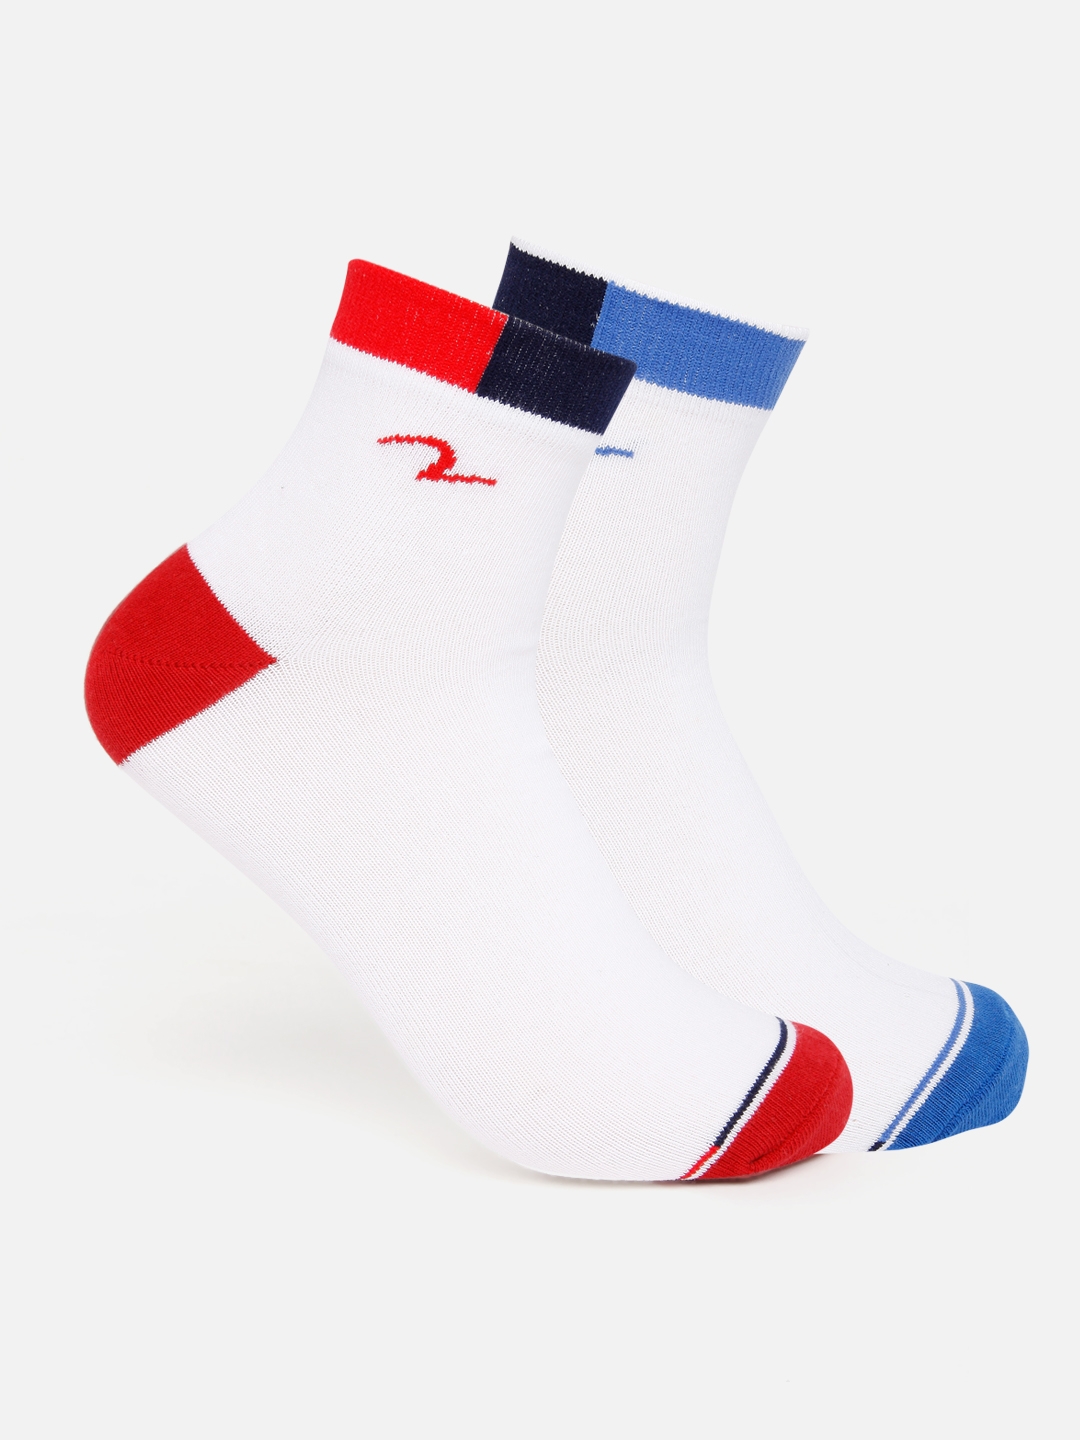 Spykar | Spykar Red and Blue Socks - Pack of 2